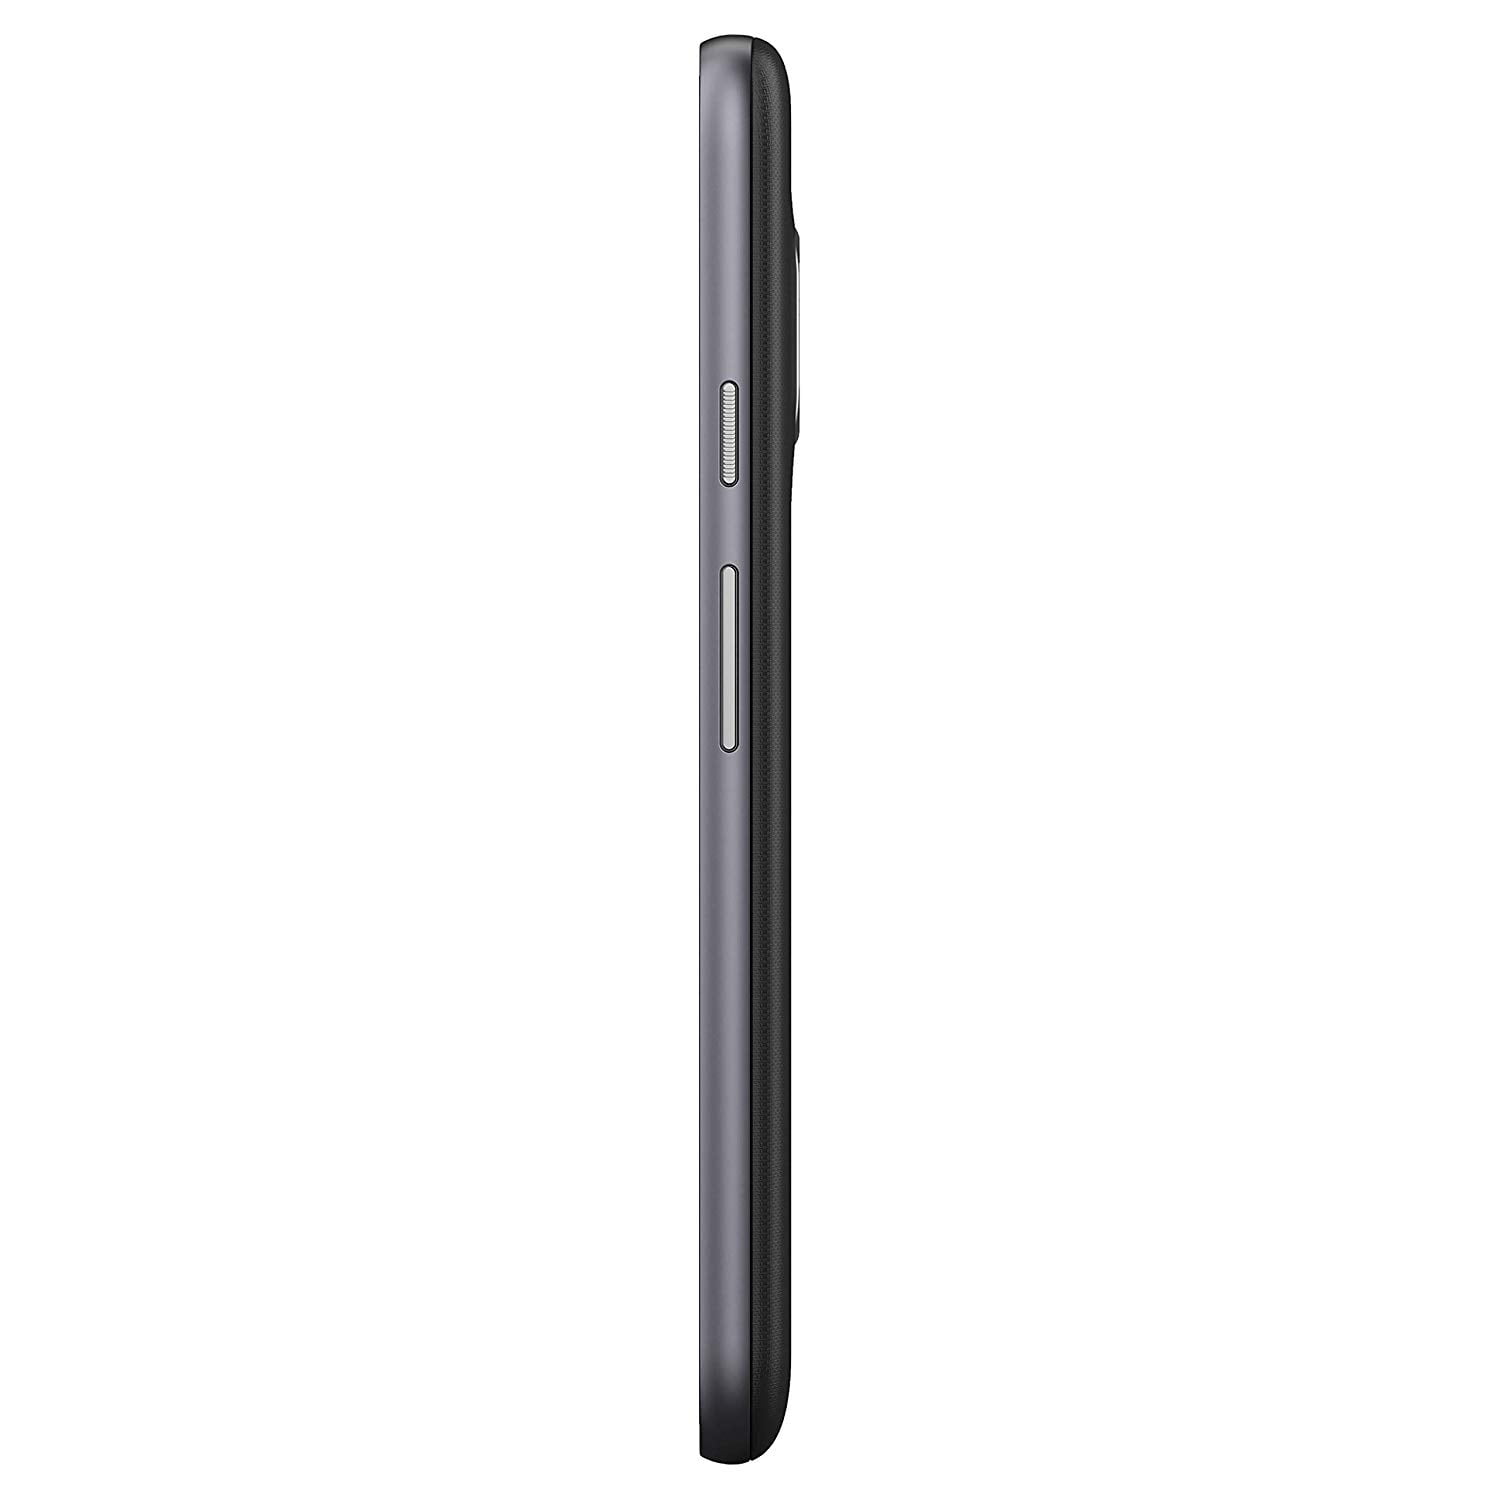 Motorola Moto G4 Play XT1601 - 16GB - Black (Unlocked) Brand New in Box  Sealed